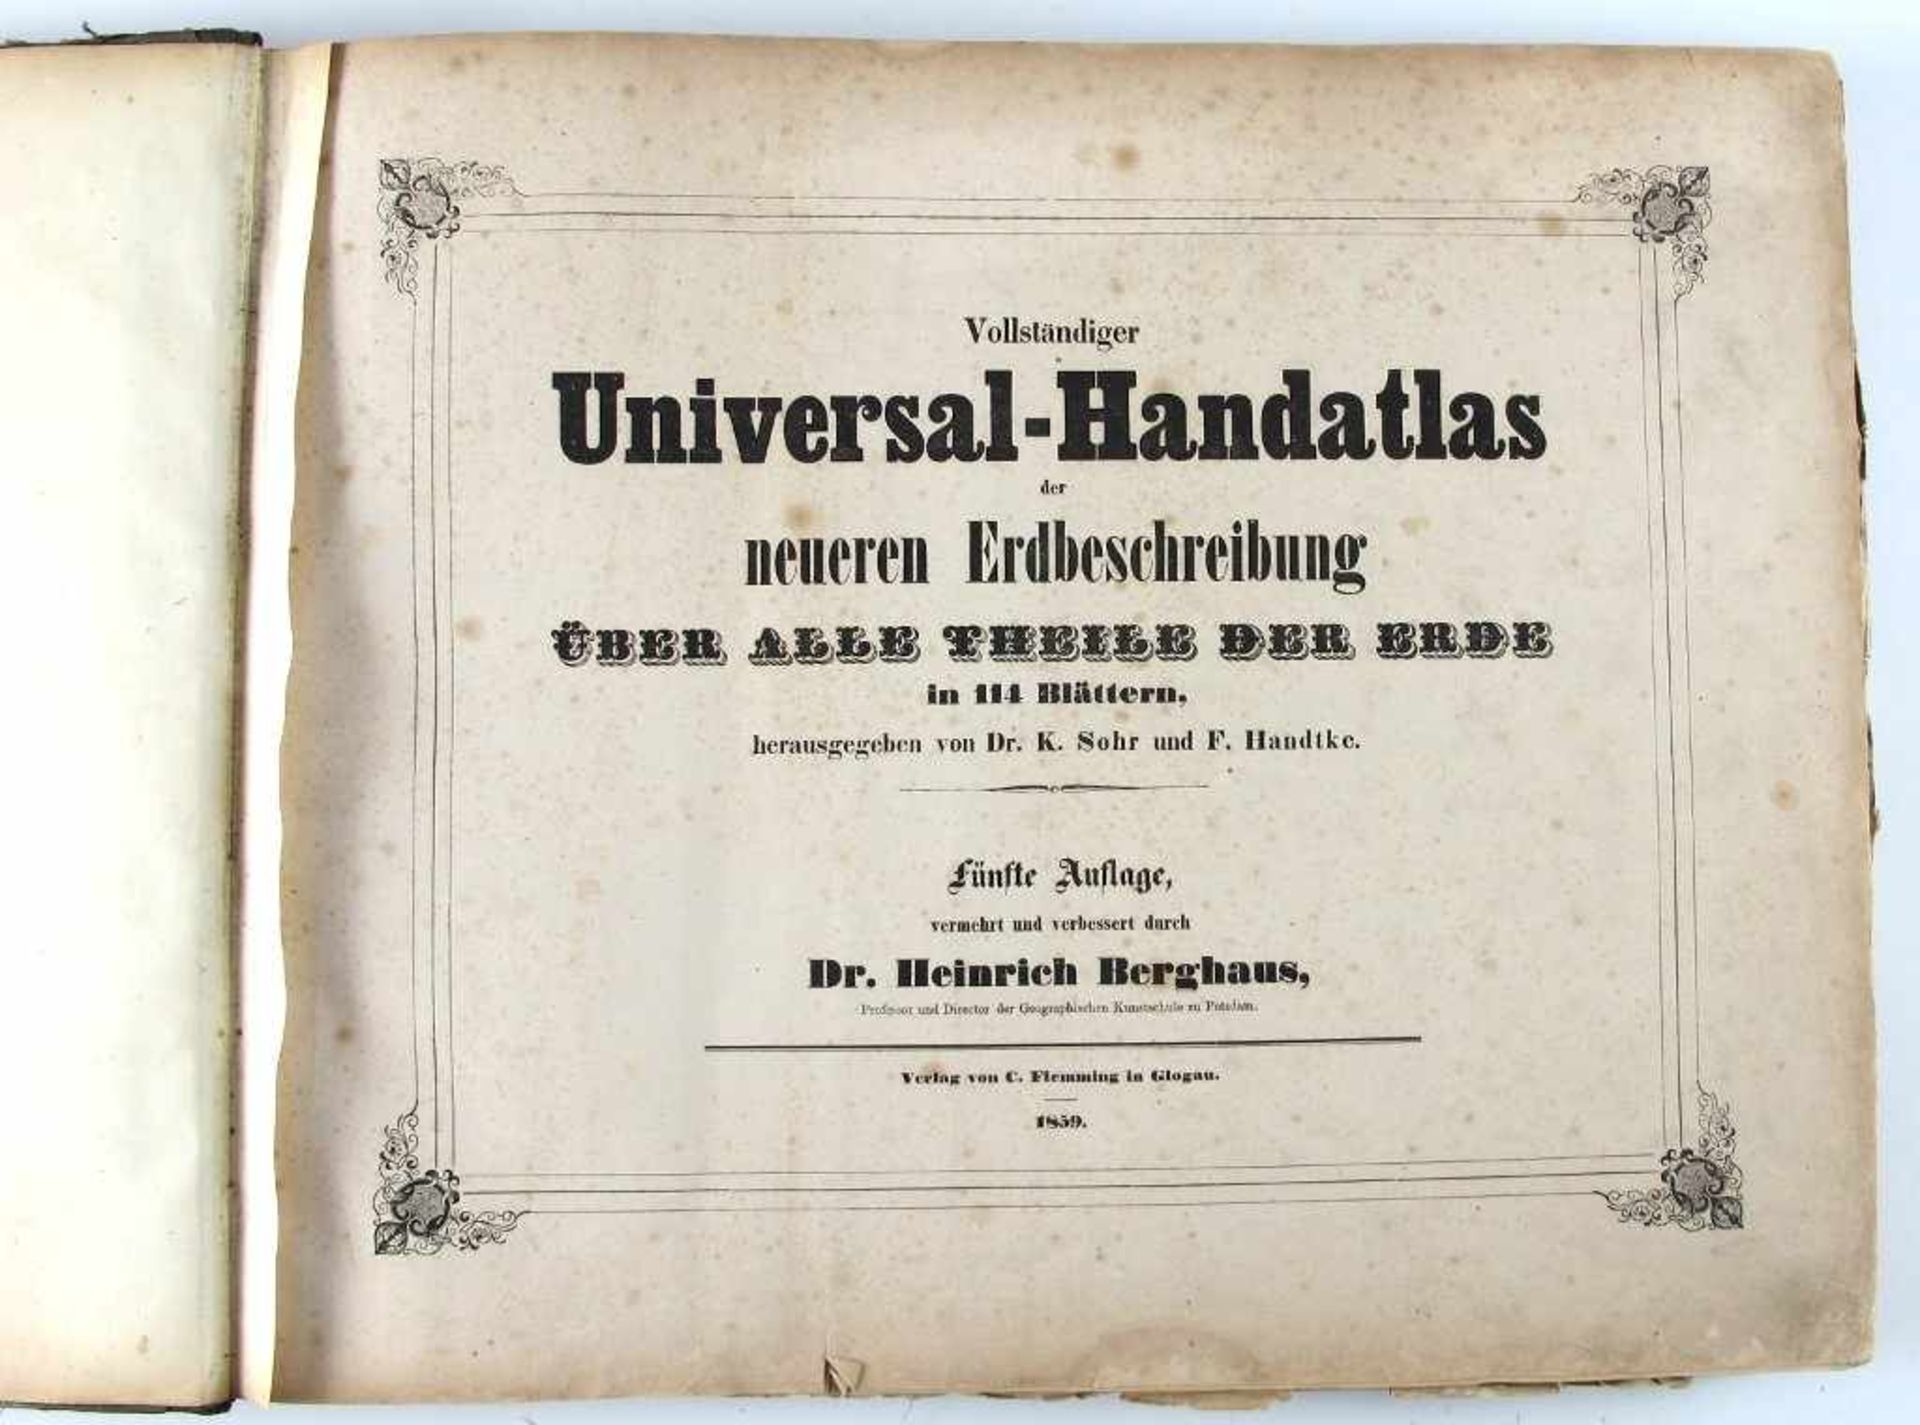 Atlas: Sohr, Dr. K(arl) und F(riedrich) Handtke (Hrsg.). Vollständiger Universal-Handatlas der